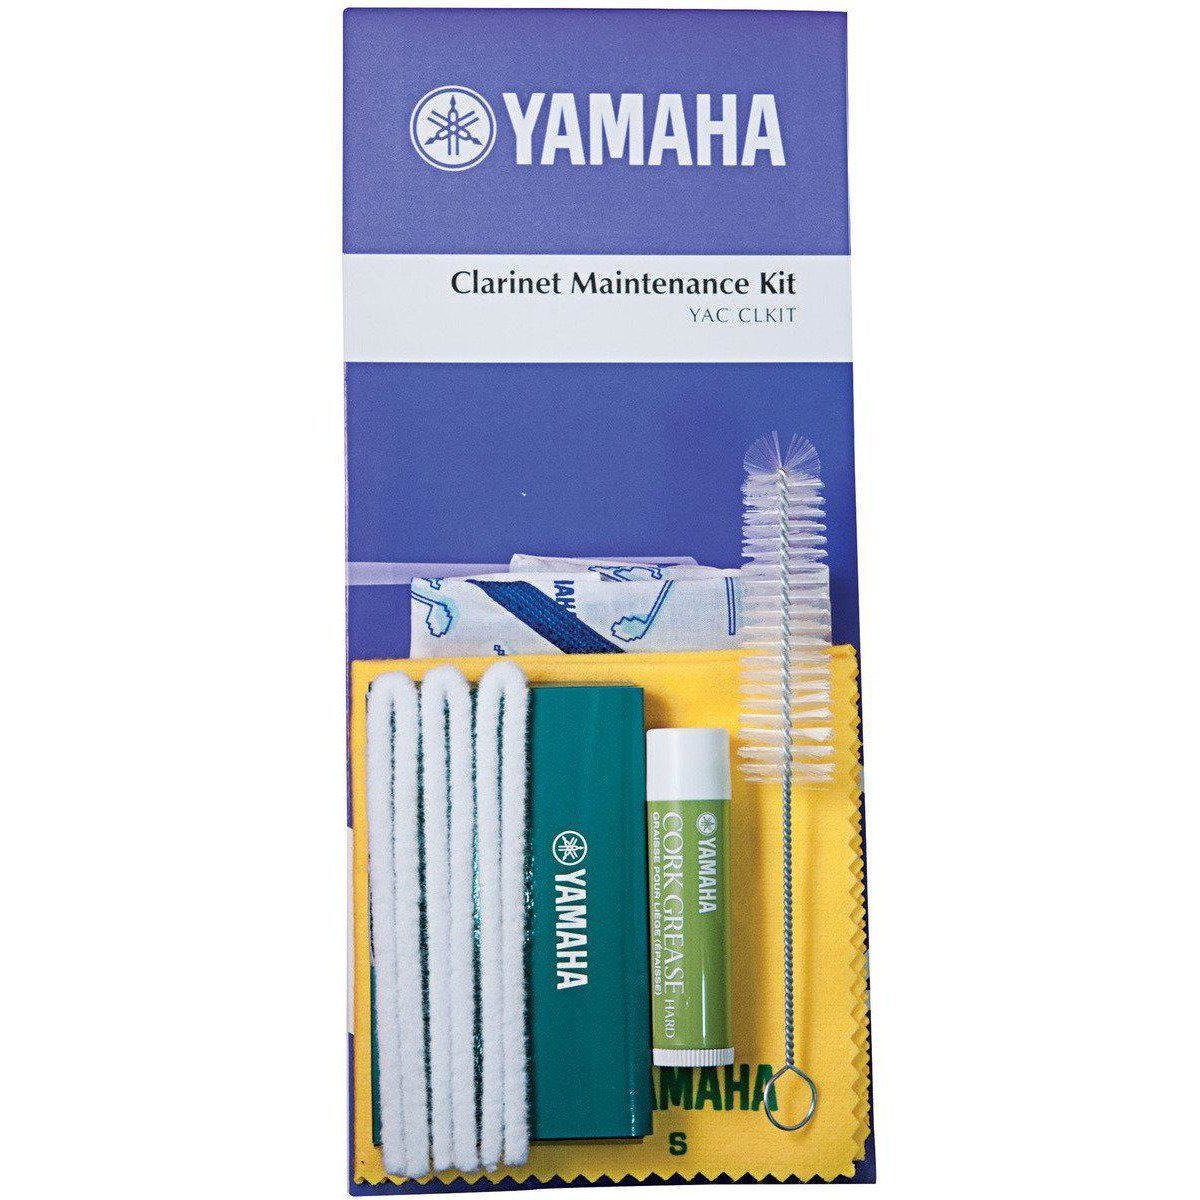 Yamaha Clarinet Maintenance Kit YACCLKIT-Andy's Music